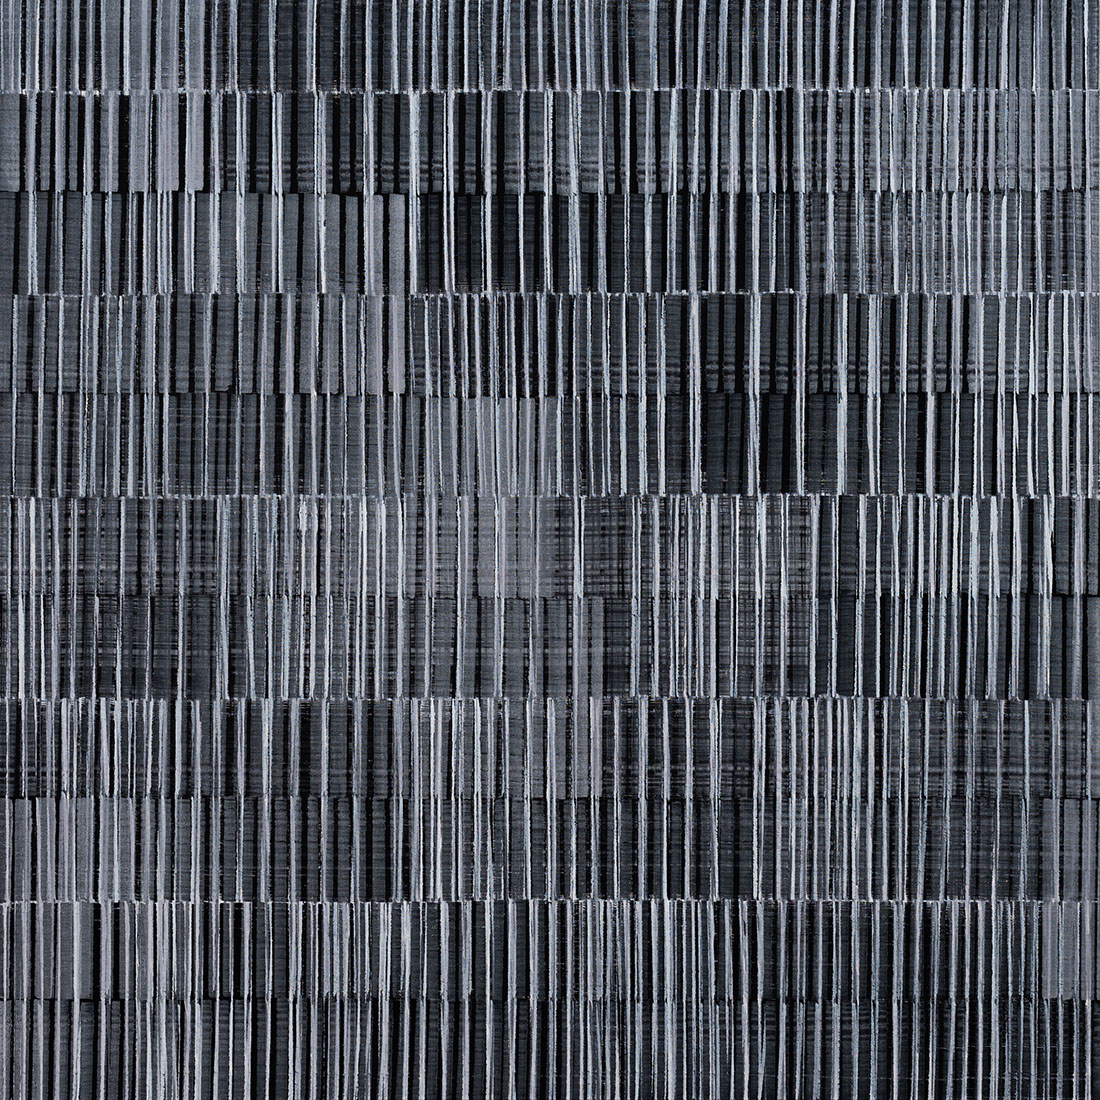 Nikola Dimitrov, NachtKlang IX, 2020, Pigmente, Bindemittel auf Leinwand, 110 x 110 cm